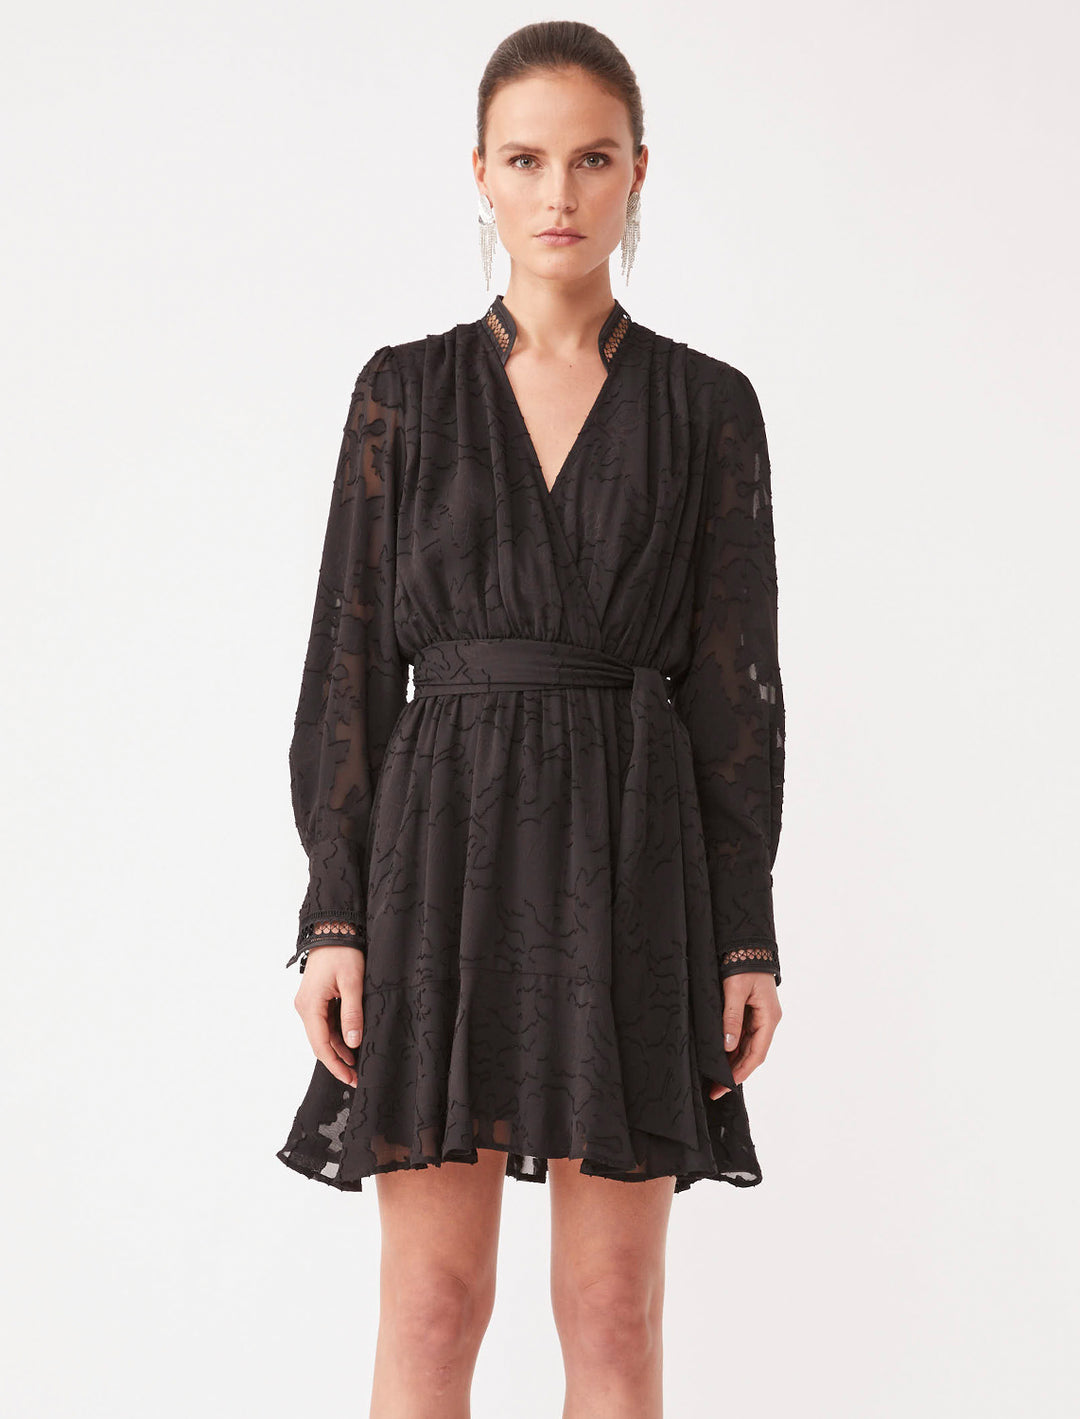 Model wearing Suncoo Paris' Charly Dress in Noir.